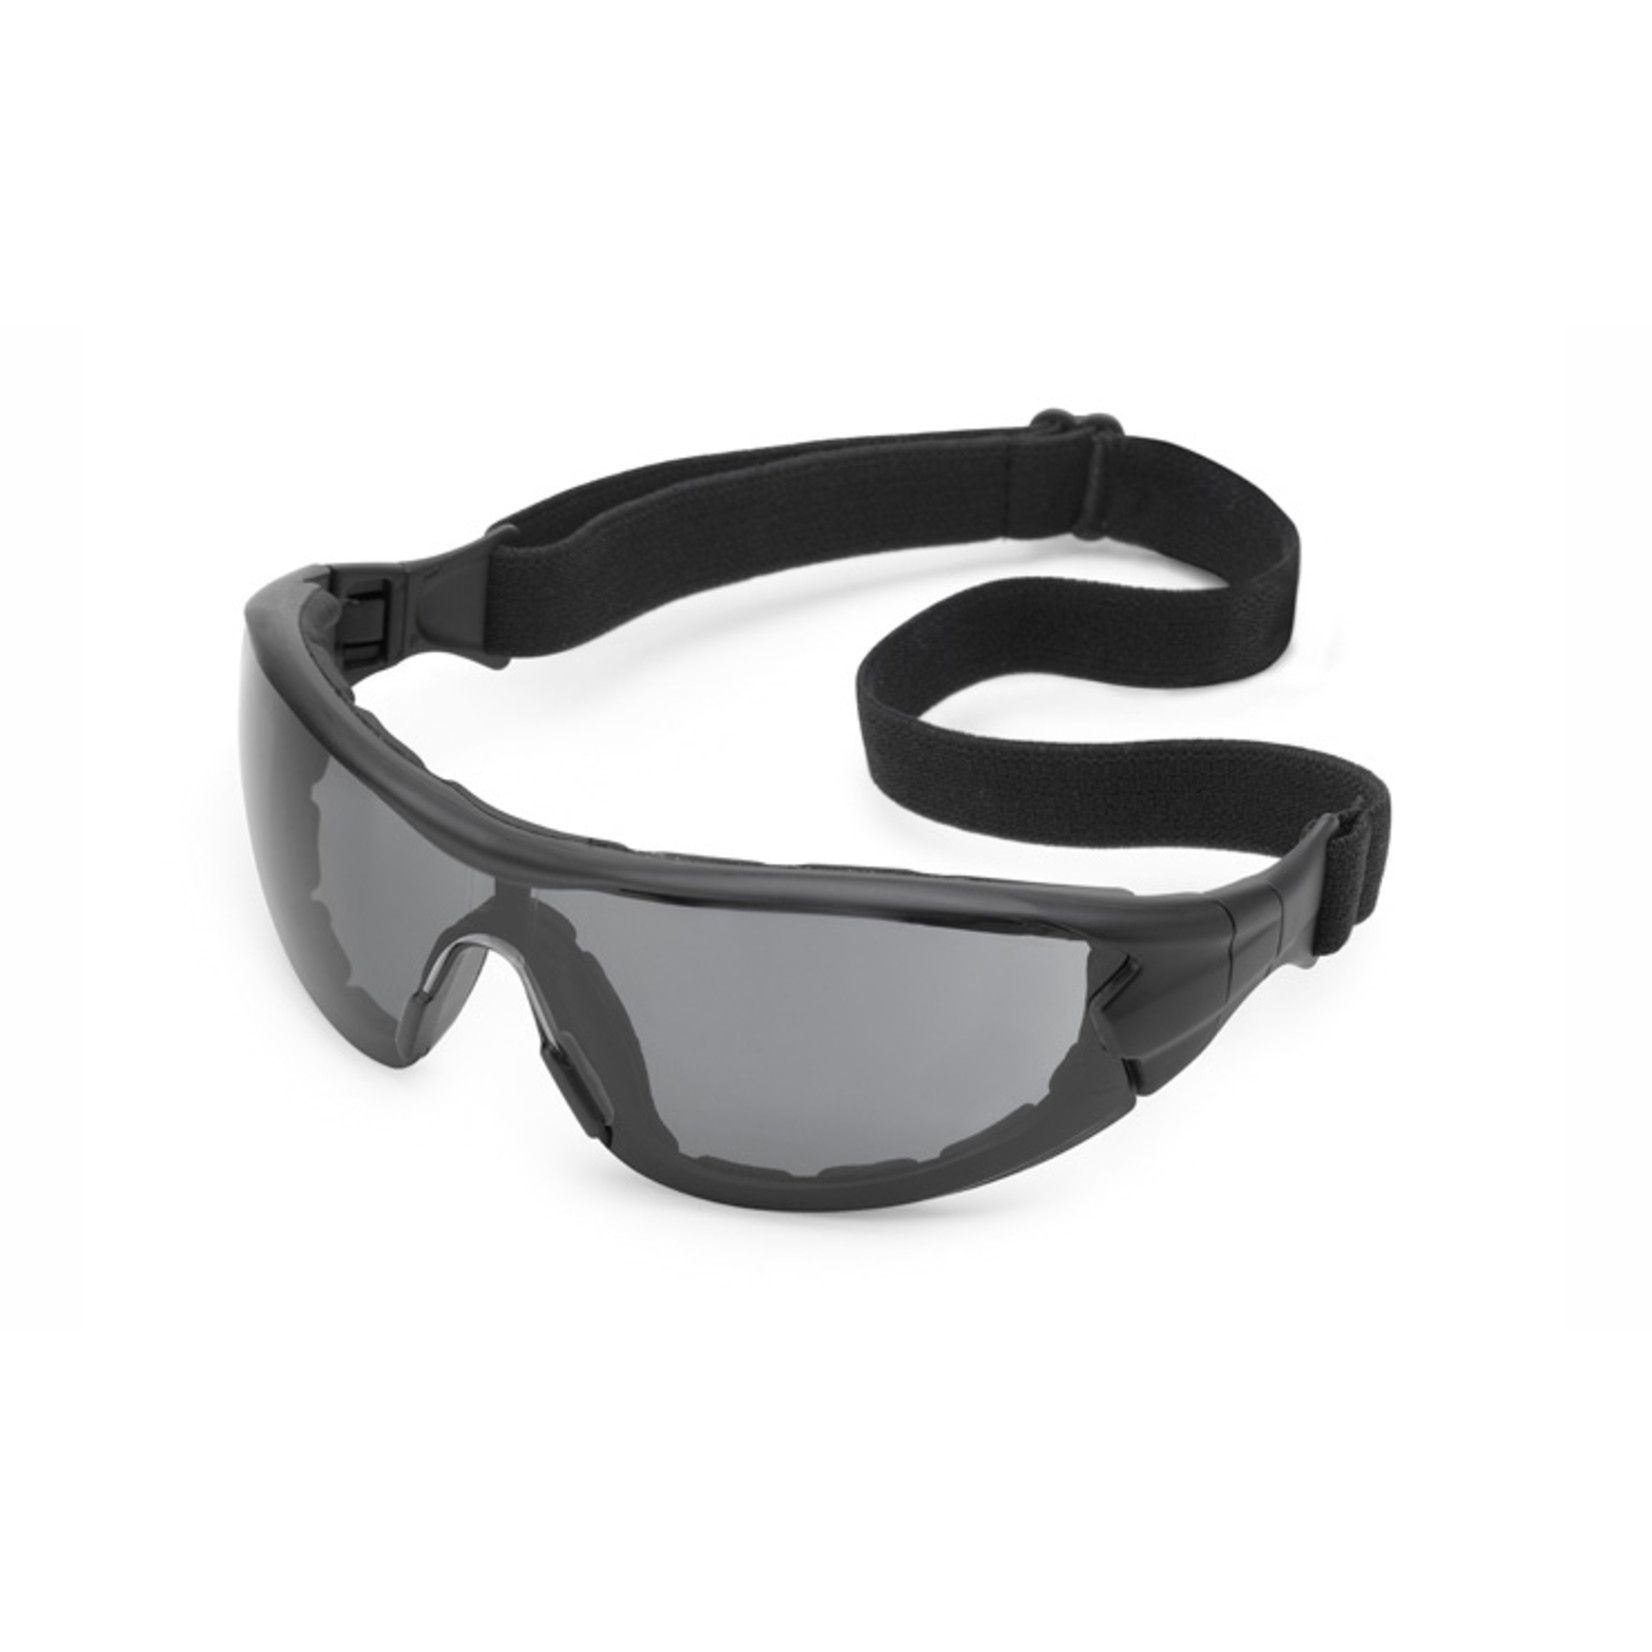 Gateway Safety 21GB79 Swap Wraparound Hybrid Eye Safety Glasses/Goggles Black/Gray with Foam Edge